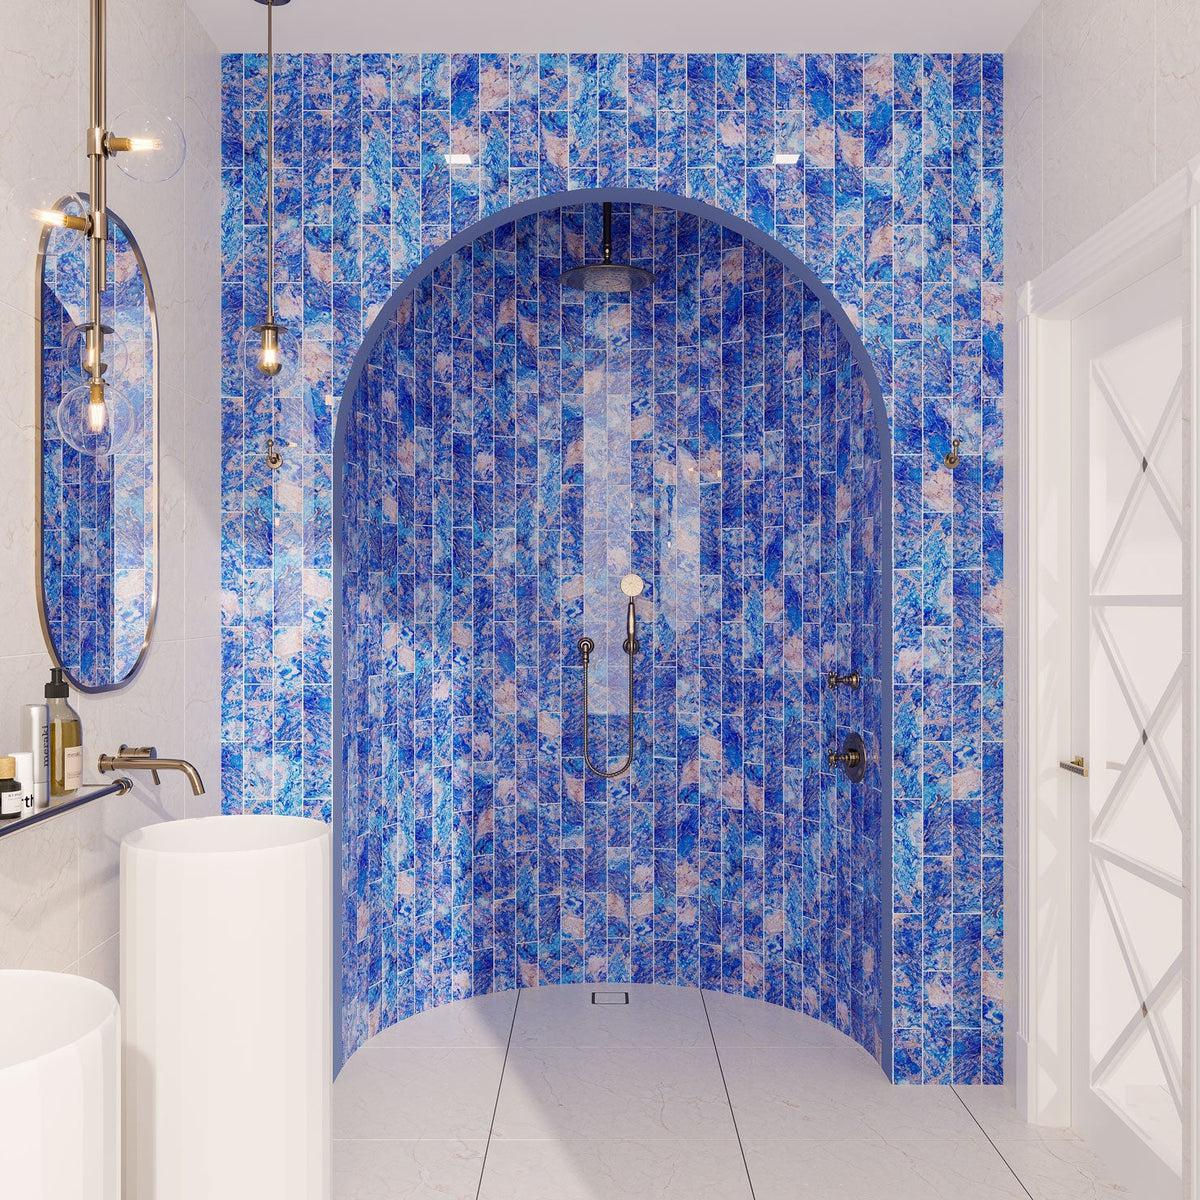 Blue subway tile bathroom shower wall with gemstone pattern